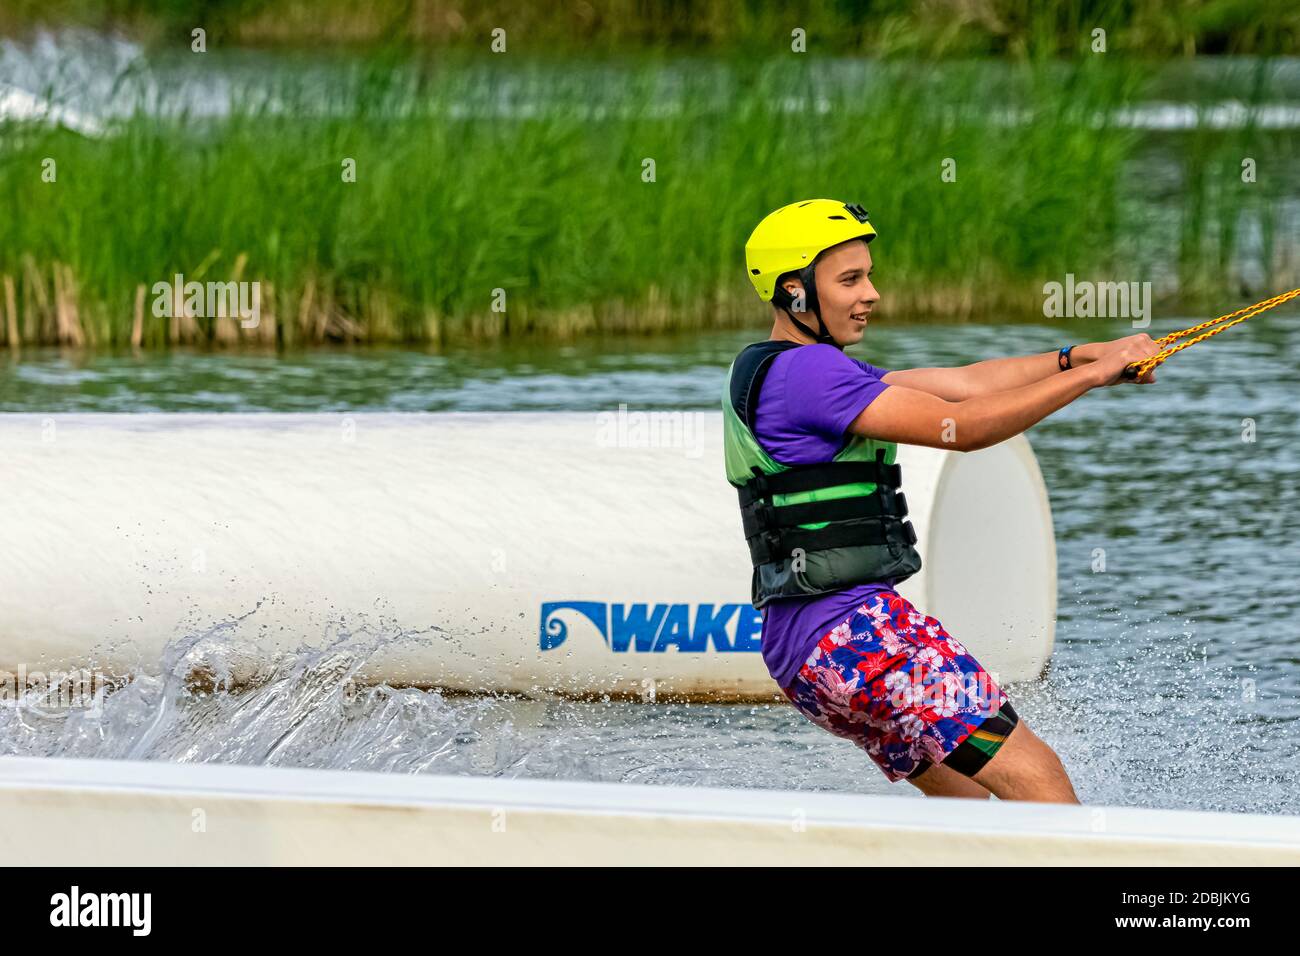 Teenager wakeboarding on a lake - Brwinow, Masovia, Poland Stock Photo